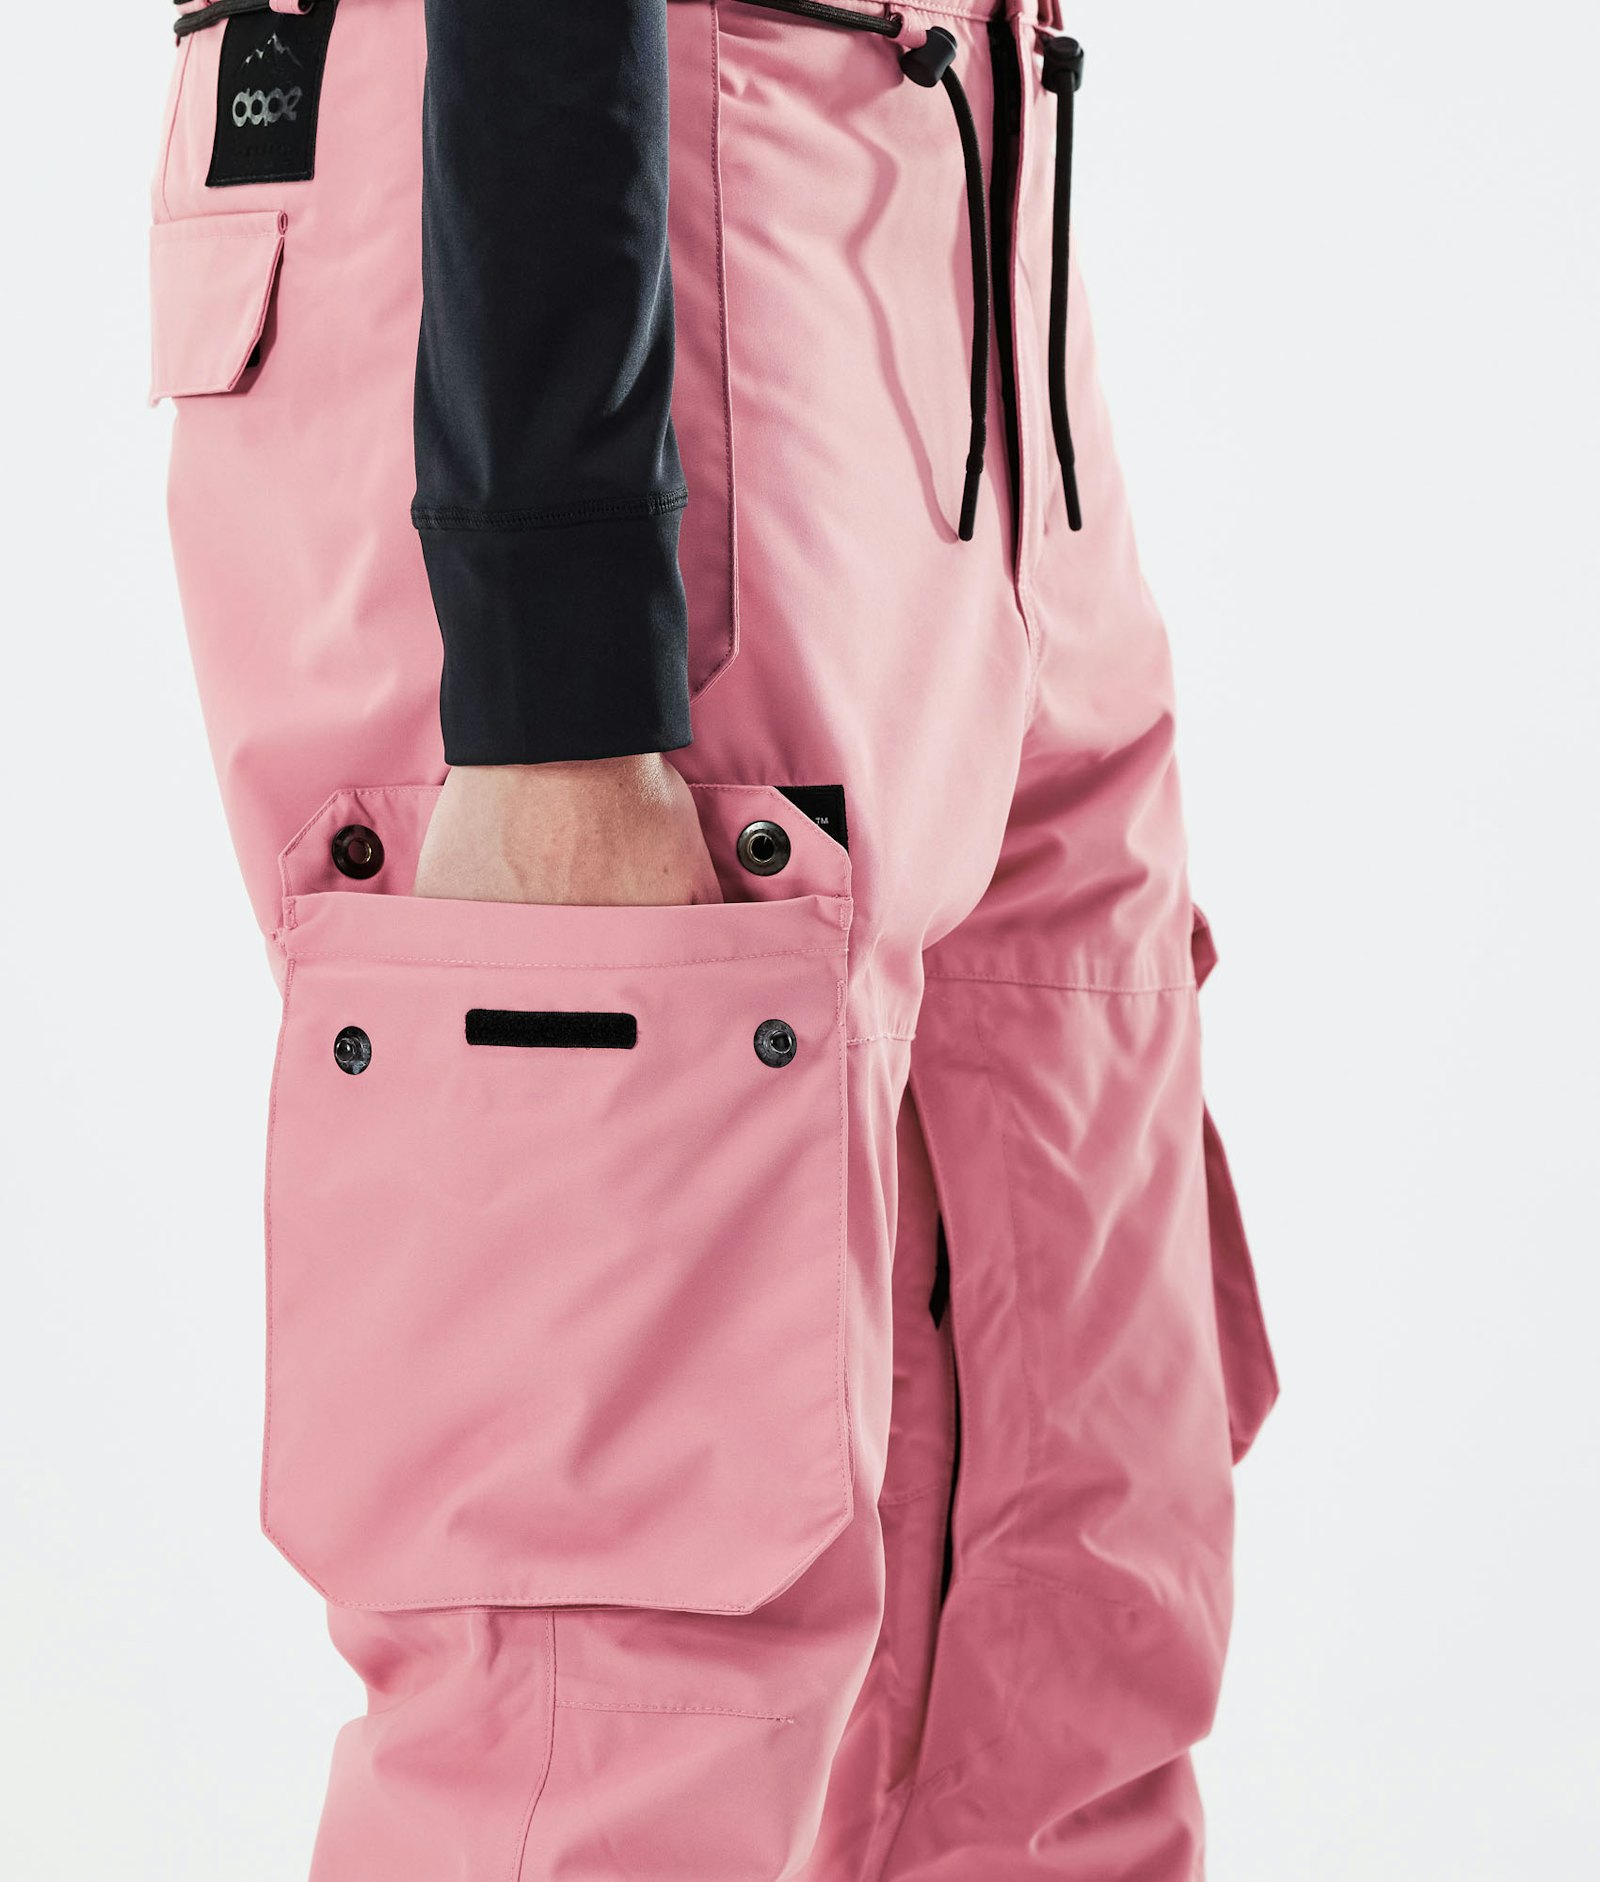 Dope Iconic W 2021 Snowboard Pants Women Pink